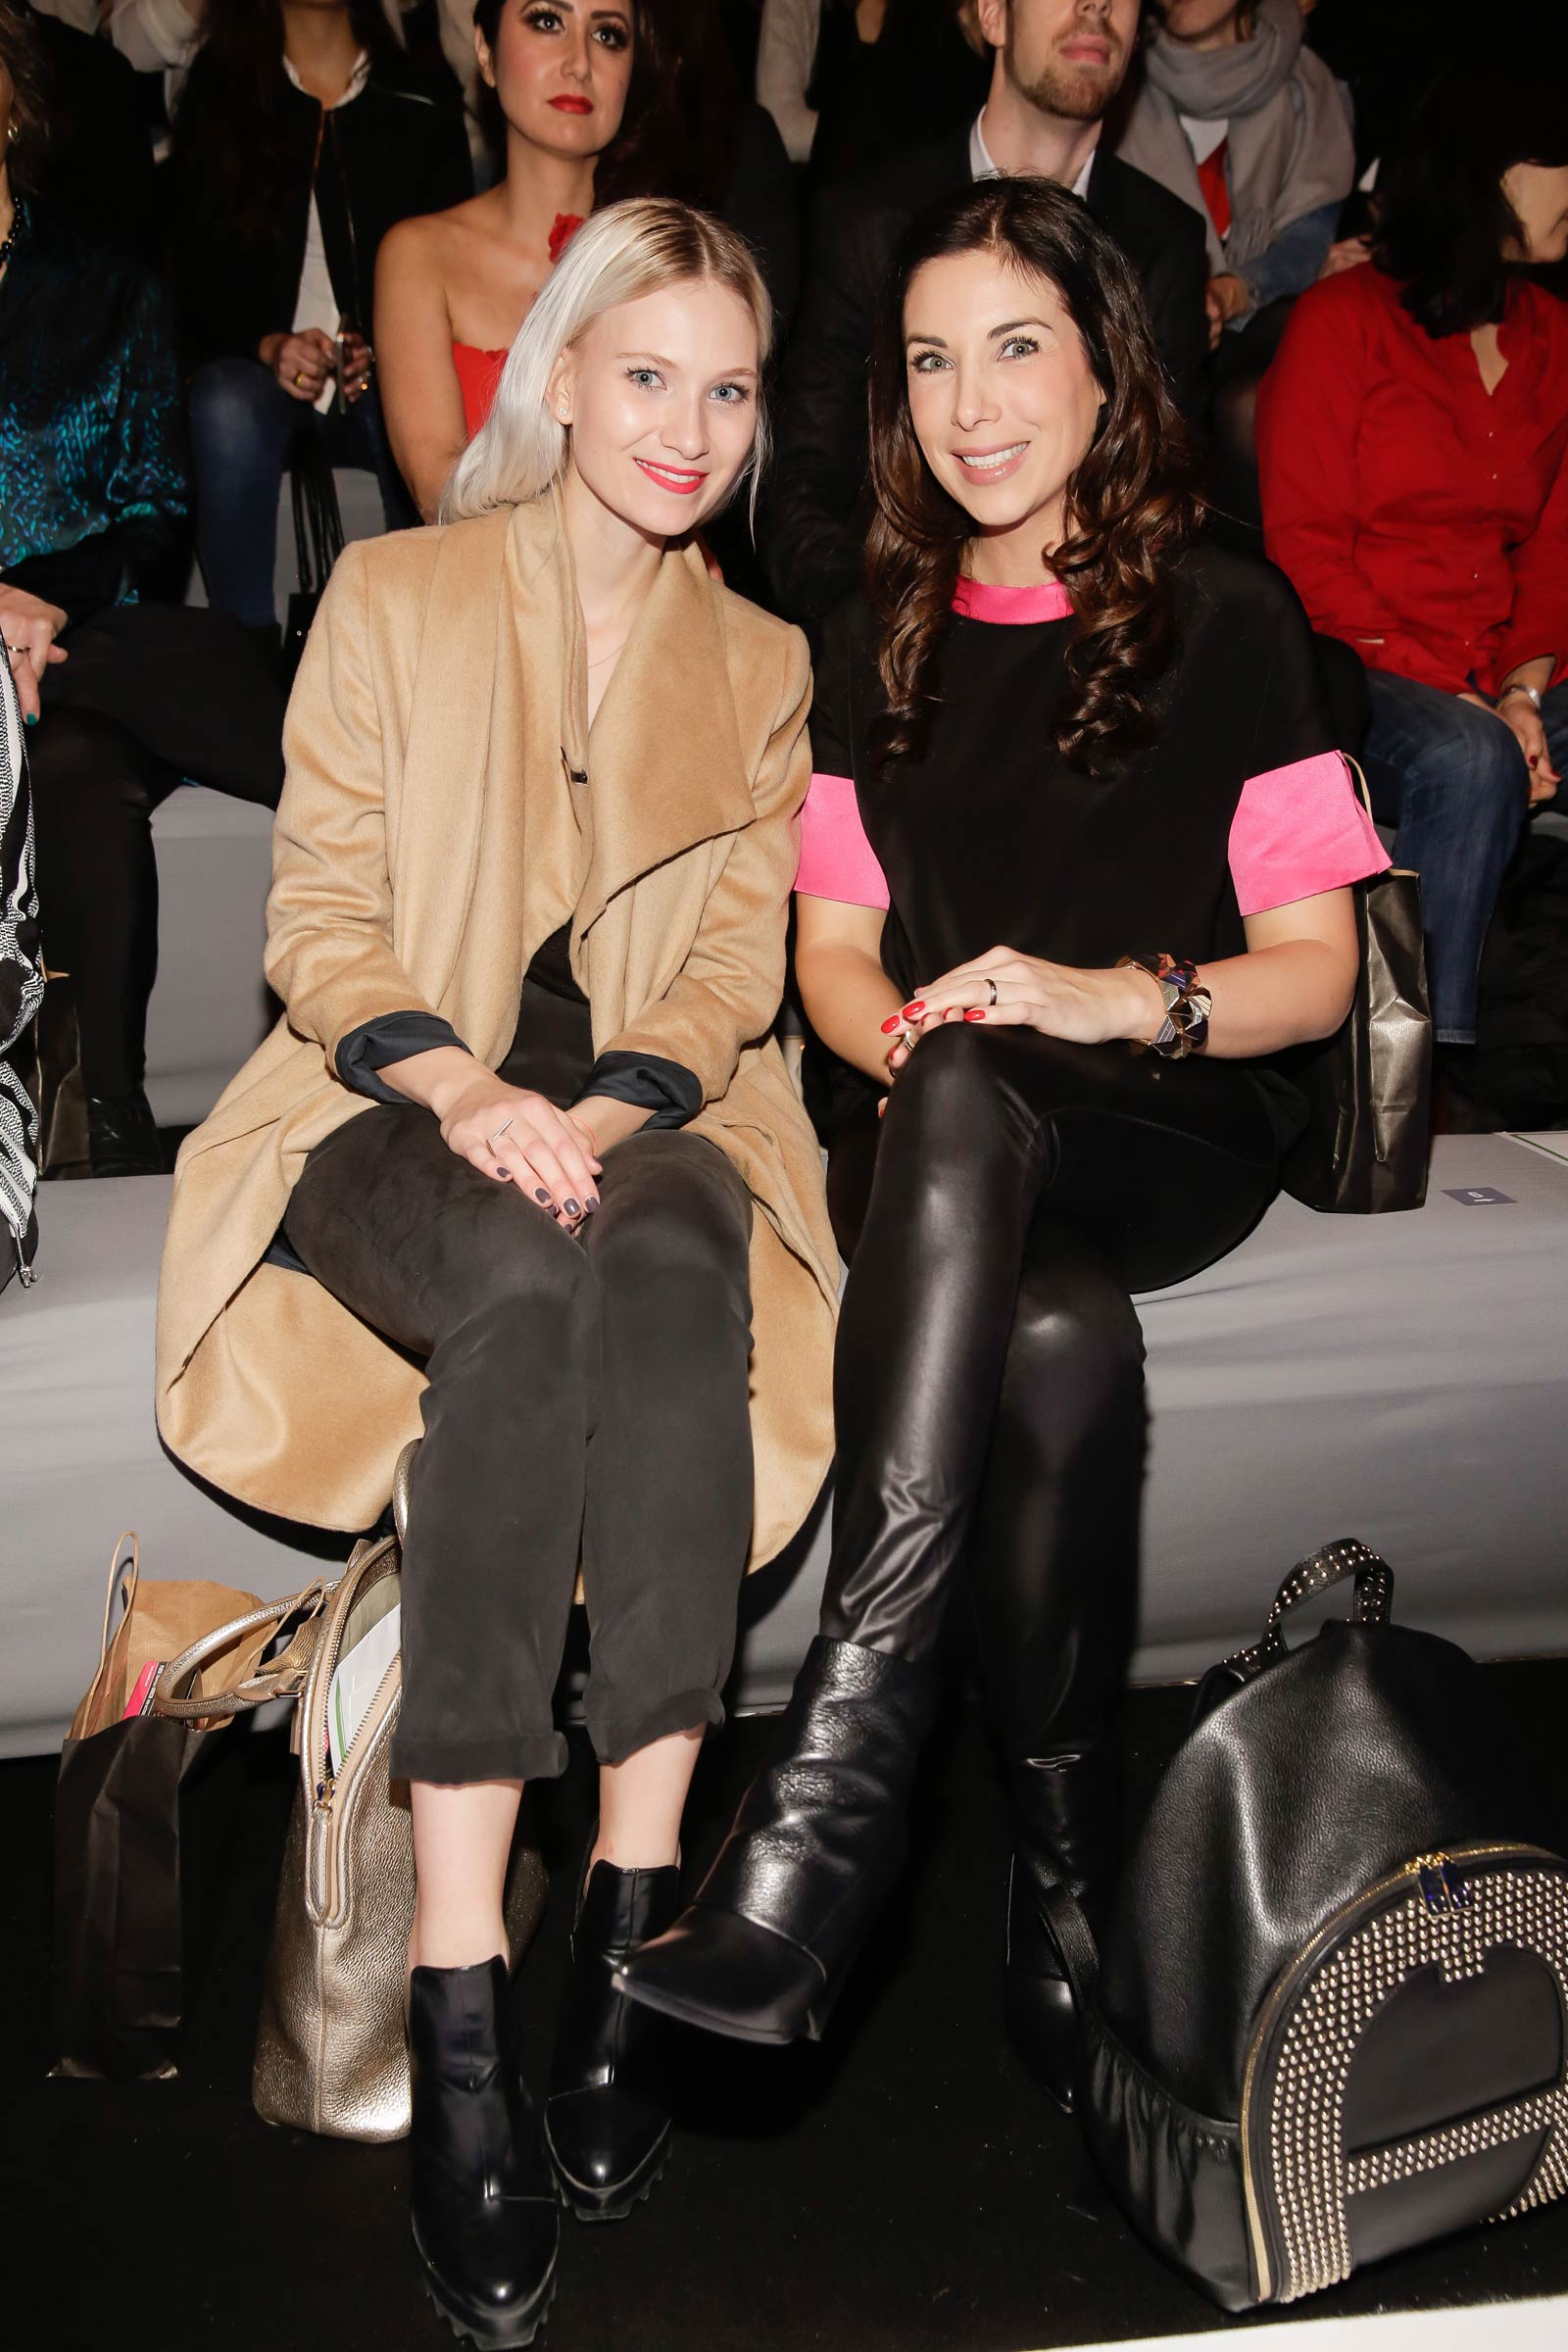 Alexandra Klim & Alexandra Polzin attend Merceses Benz Fashion Week